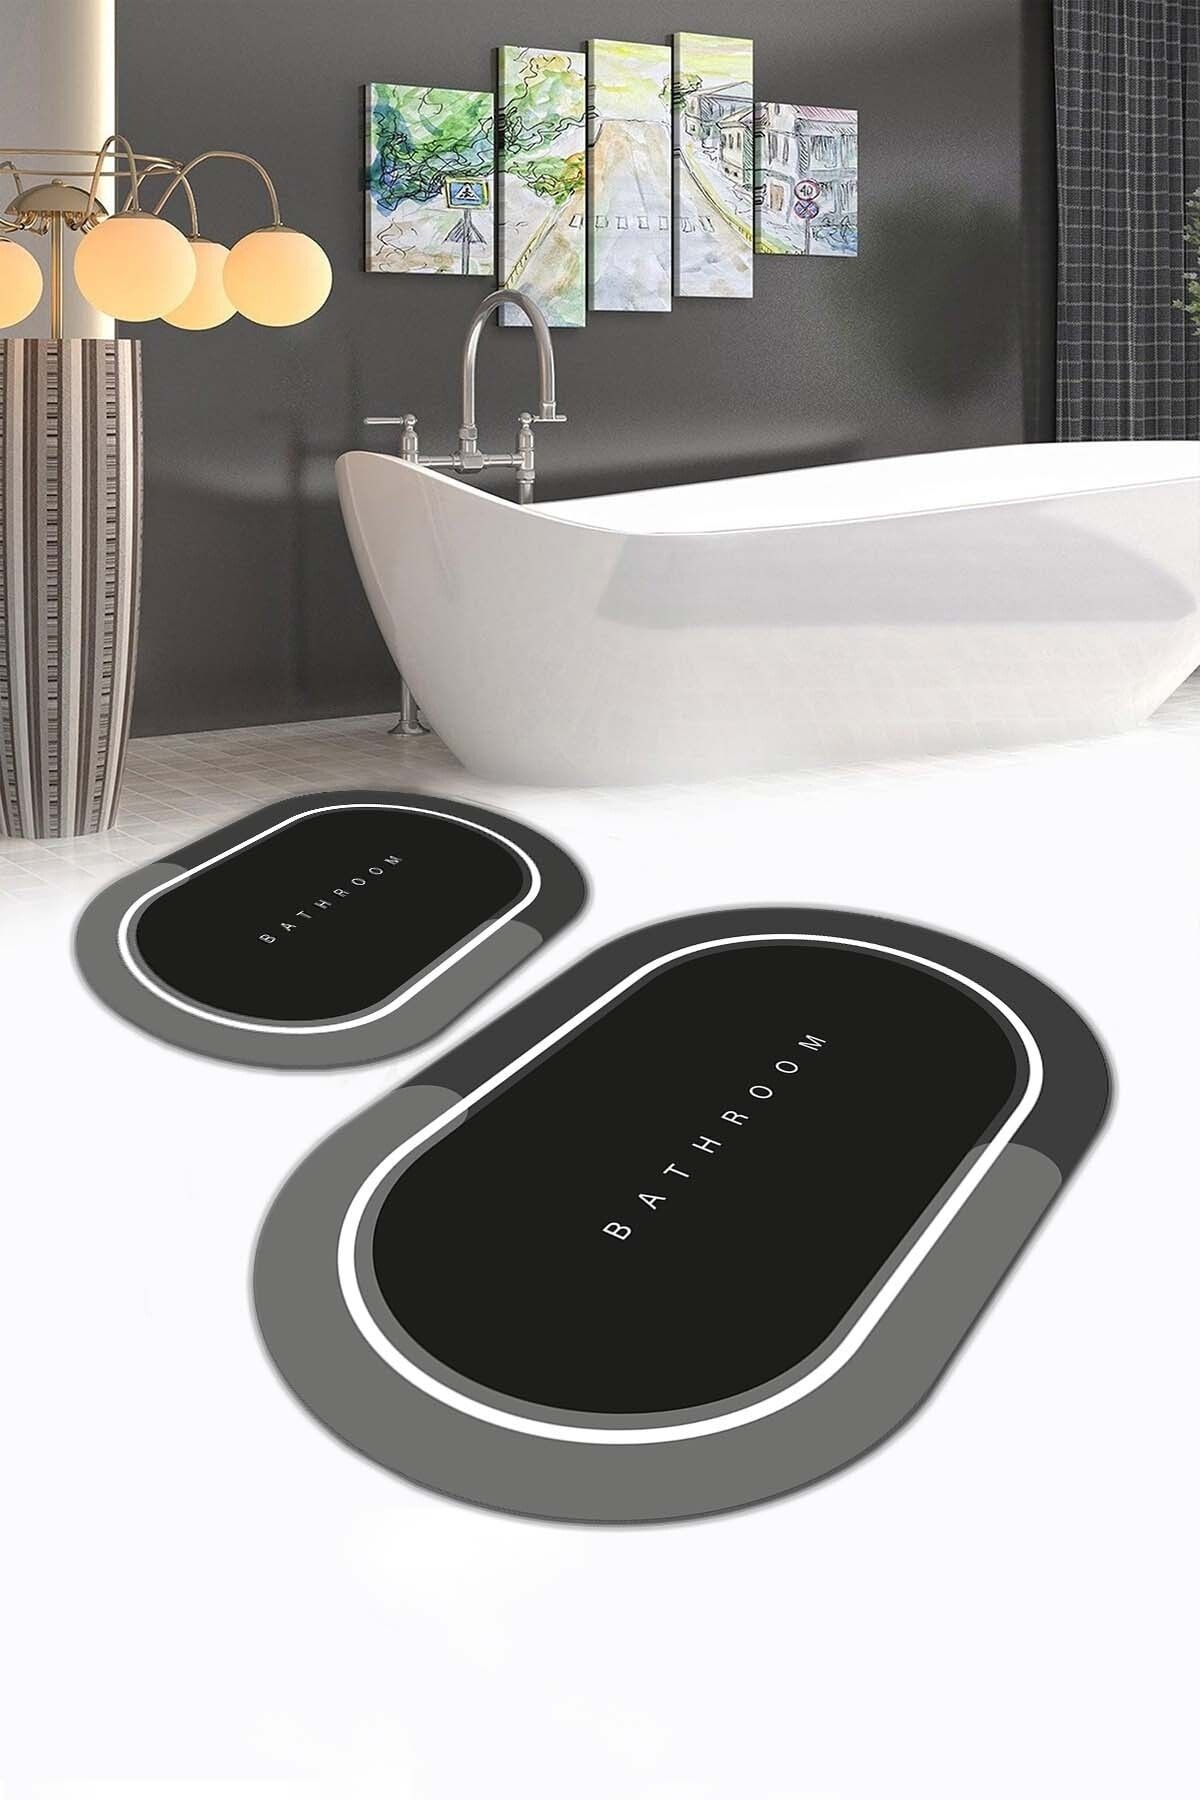 CP Rug Decorative Kaymaz Tabanlı Yıkanabilir Set 60x100 50x60 Banyo Halısı Banyo Paspası 2'li Klozet Takımı Bathroom